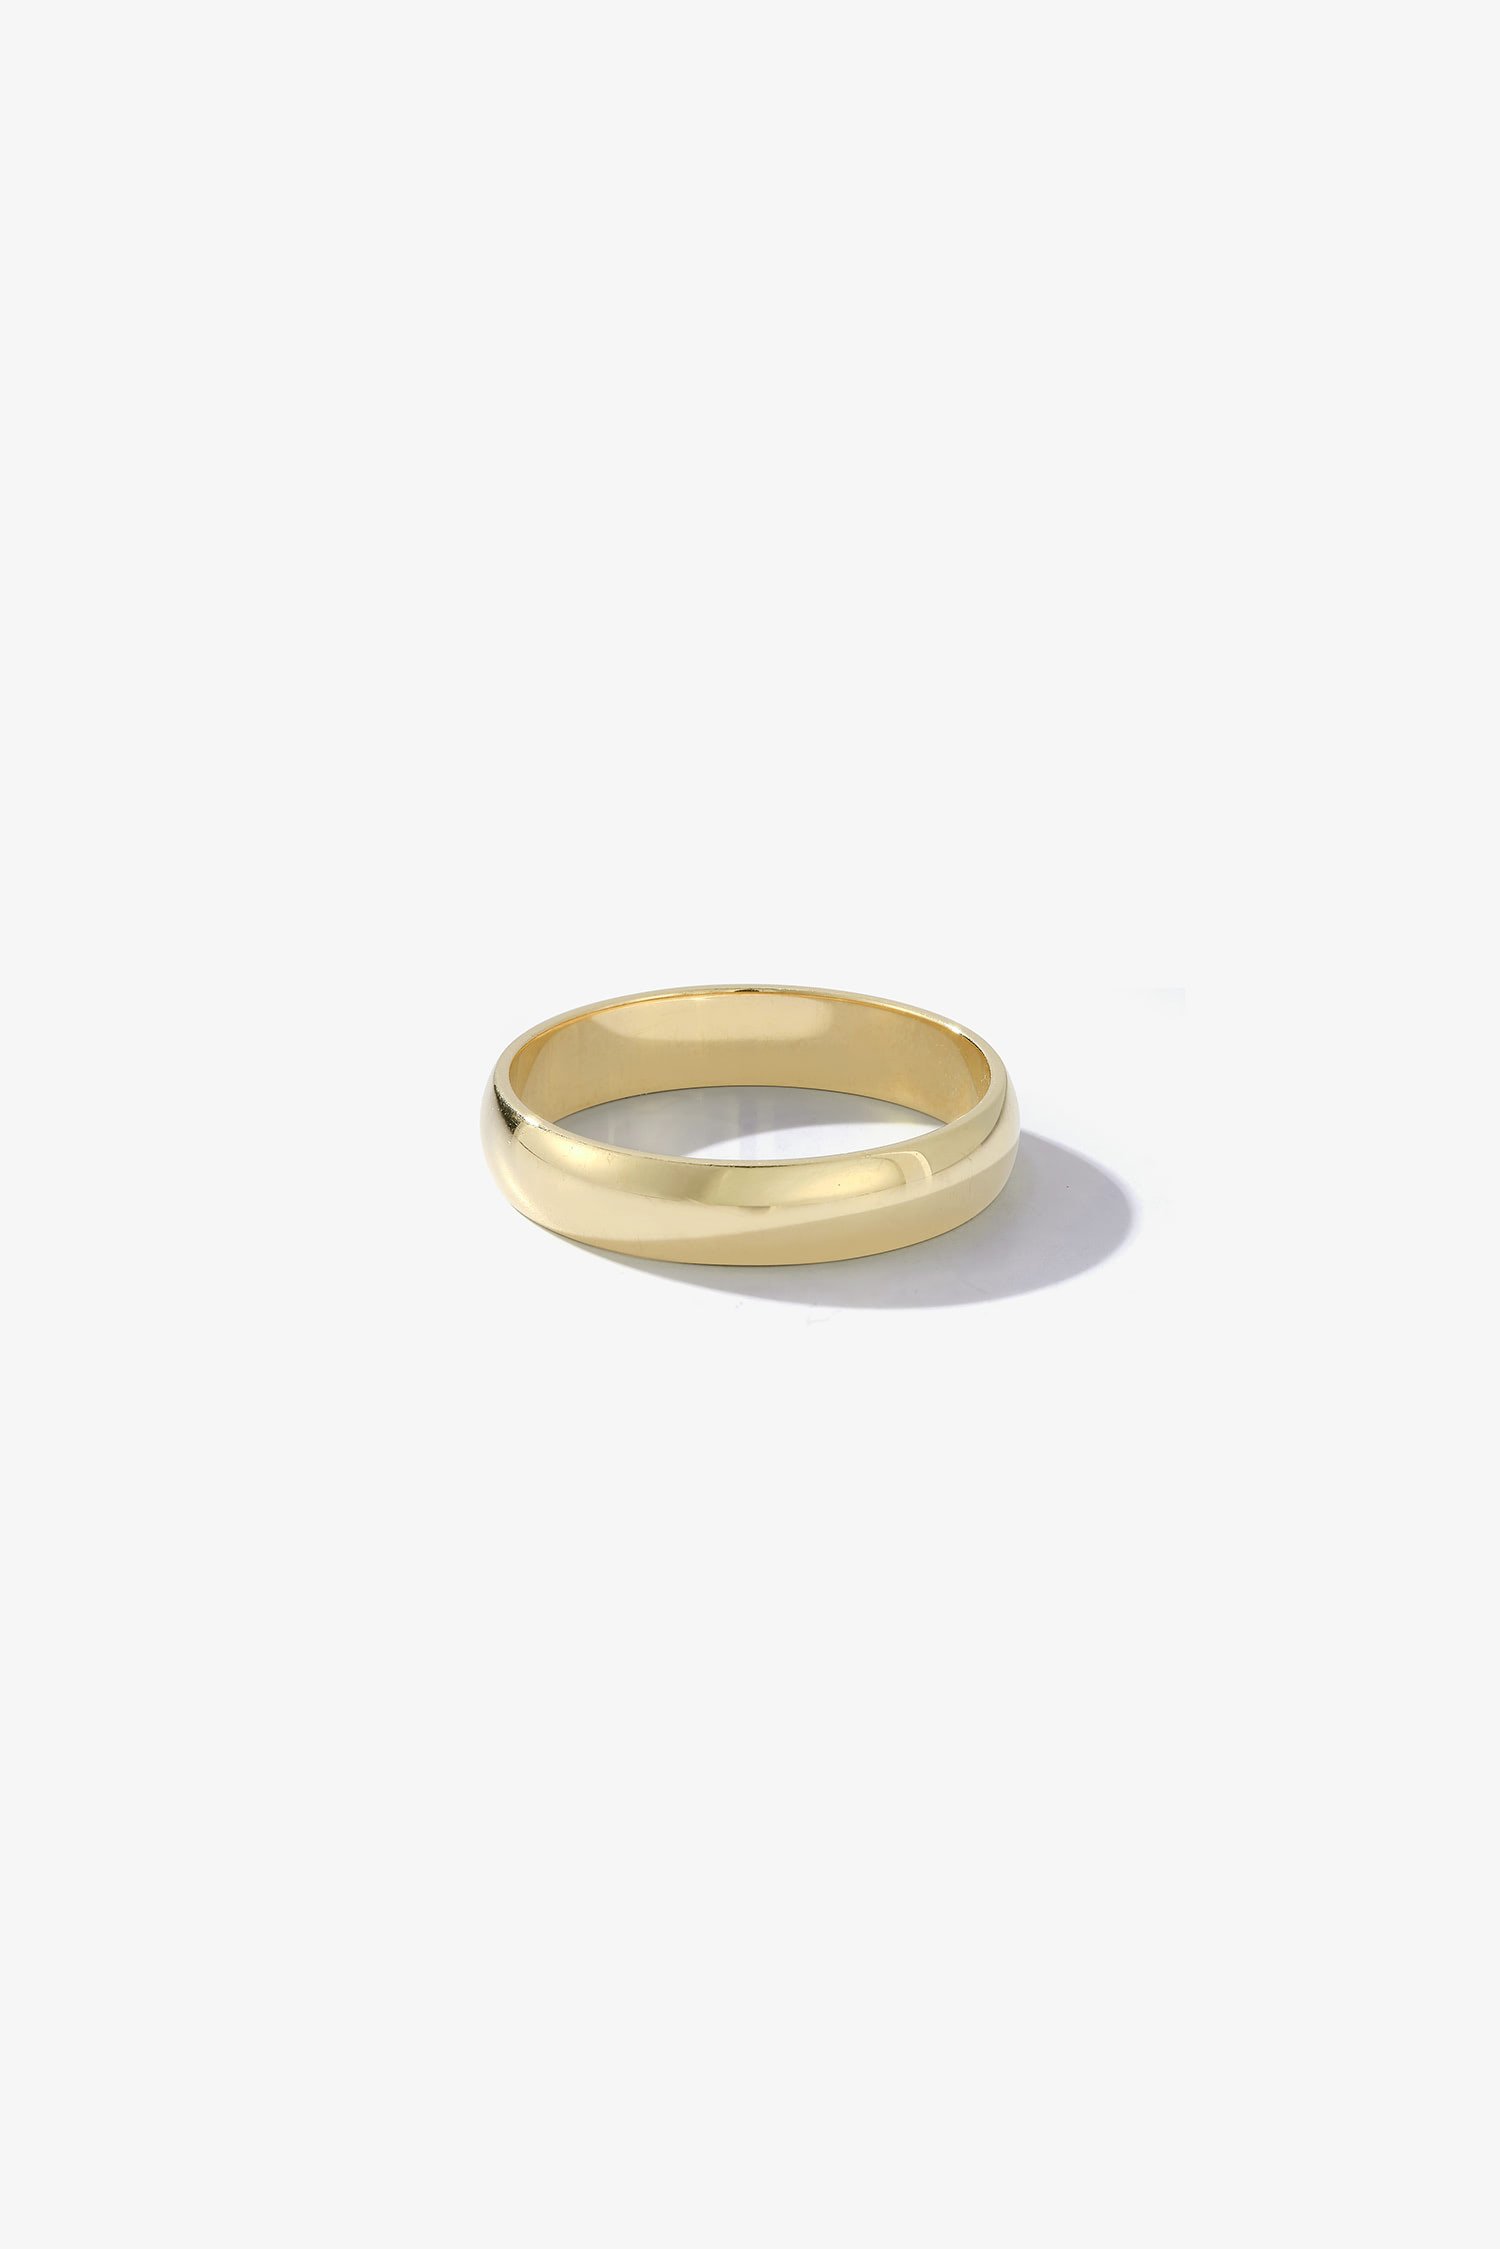 Shop — Susie Saltzman | Luxury Engagement Rings & Custom Jewelry